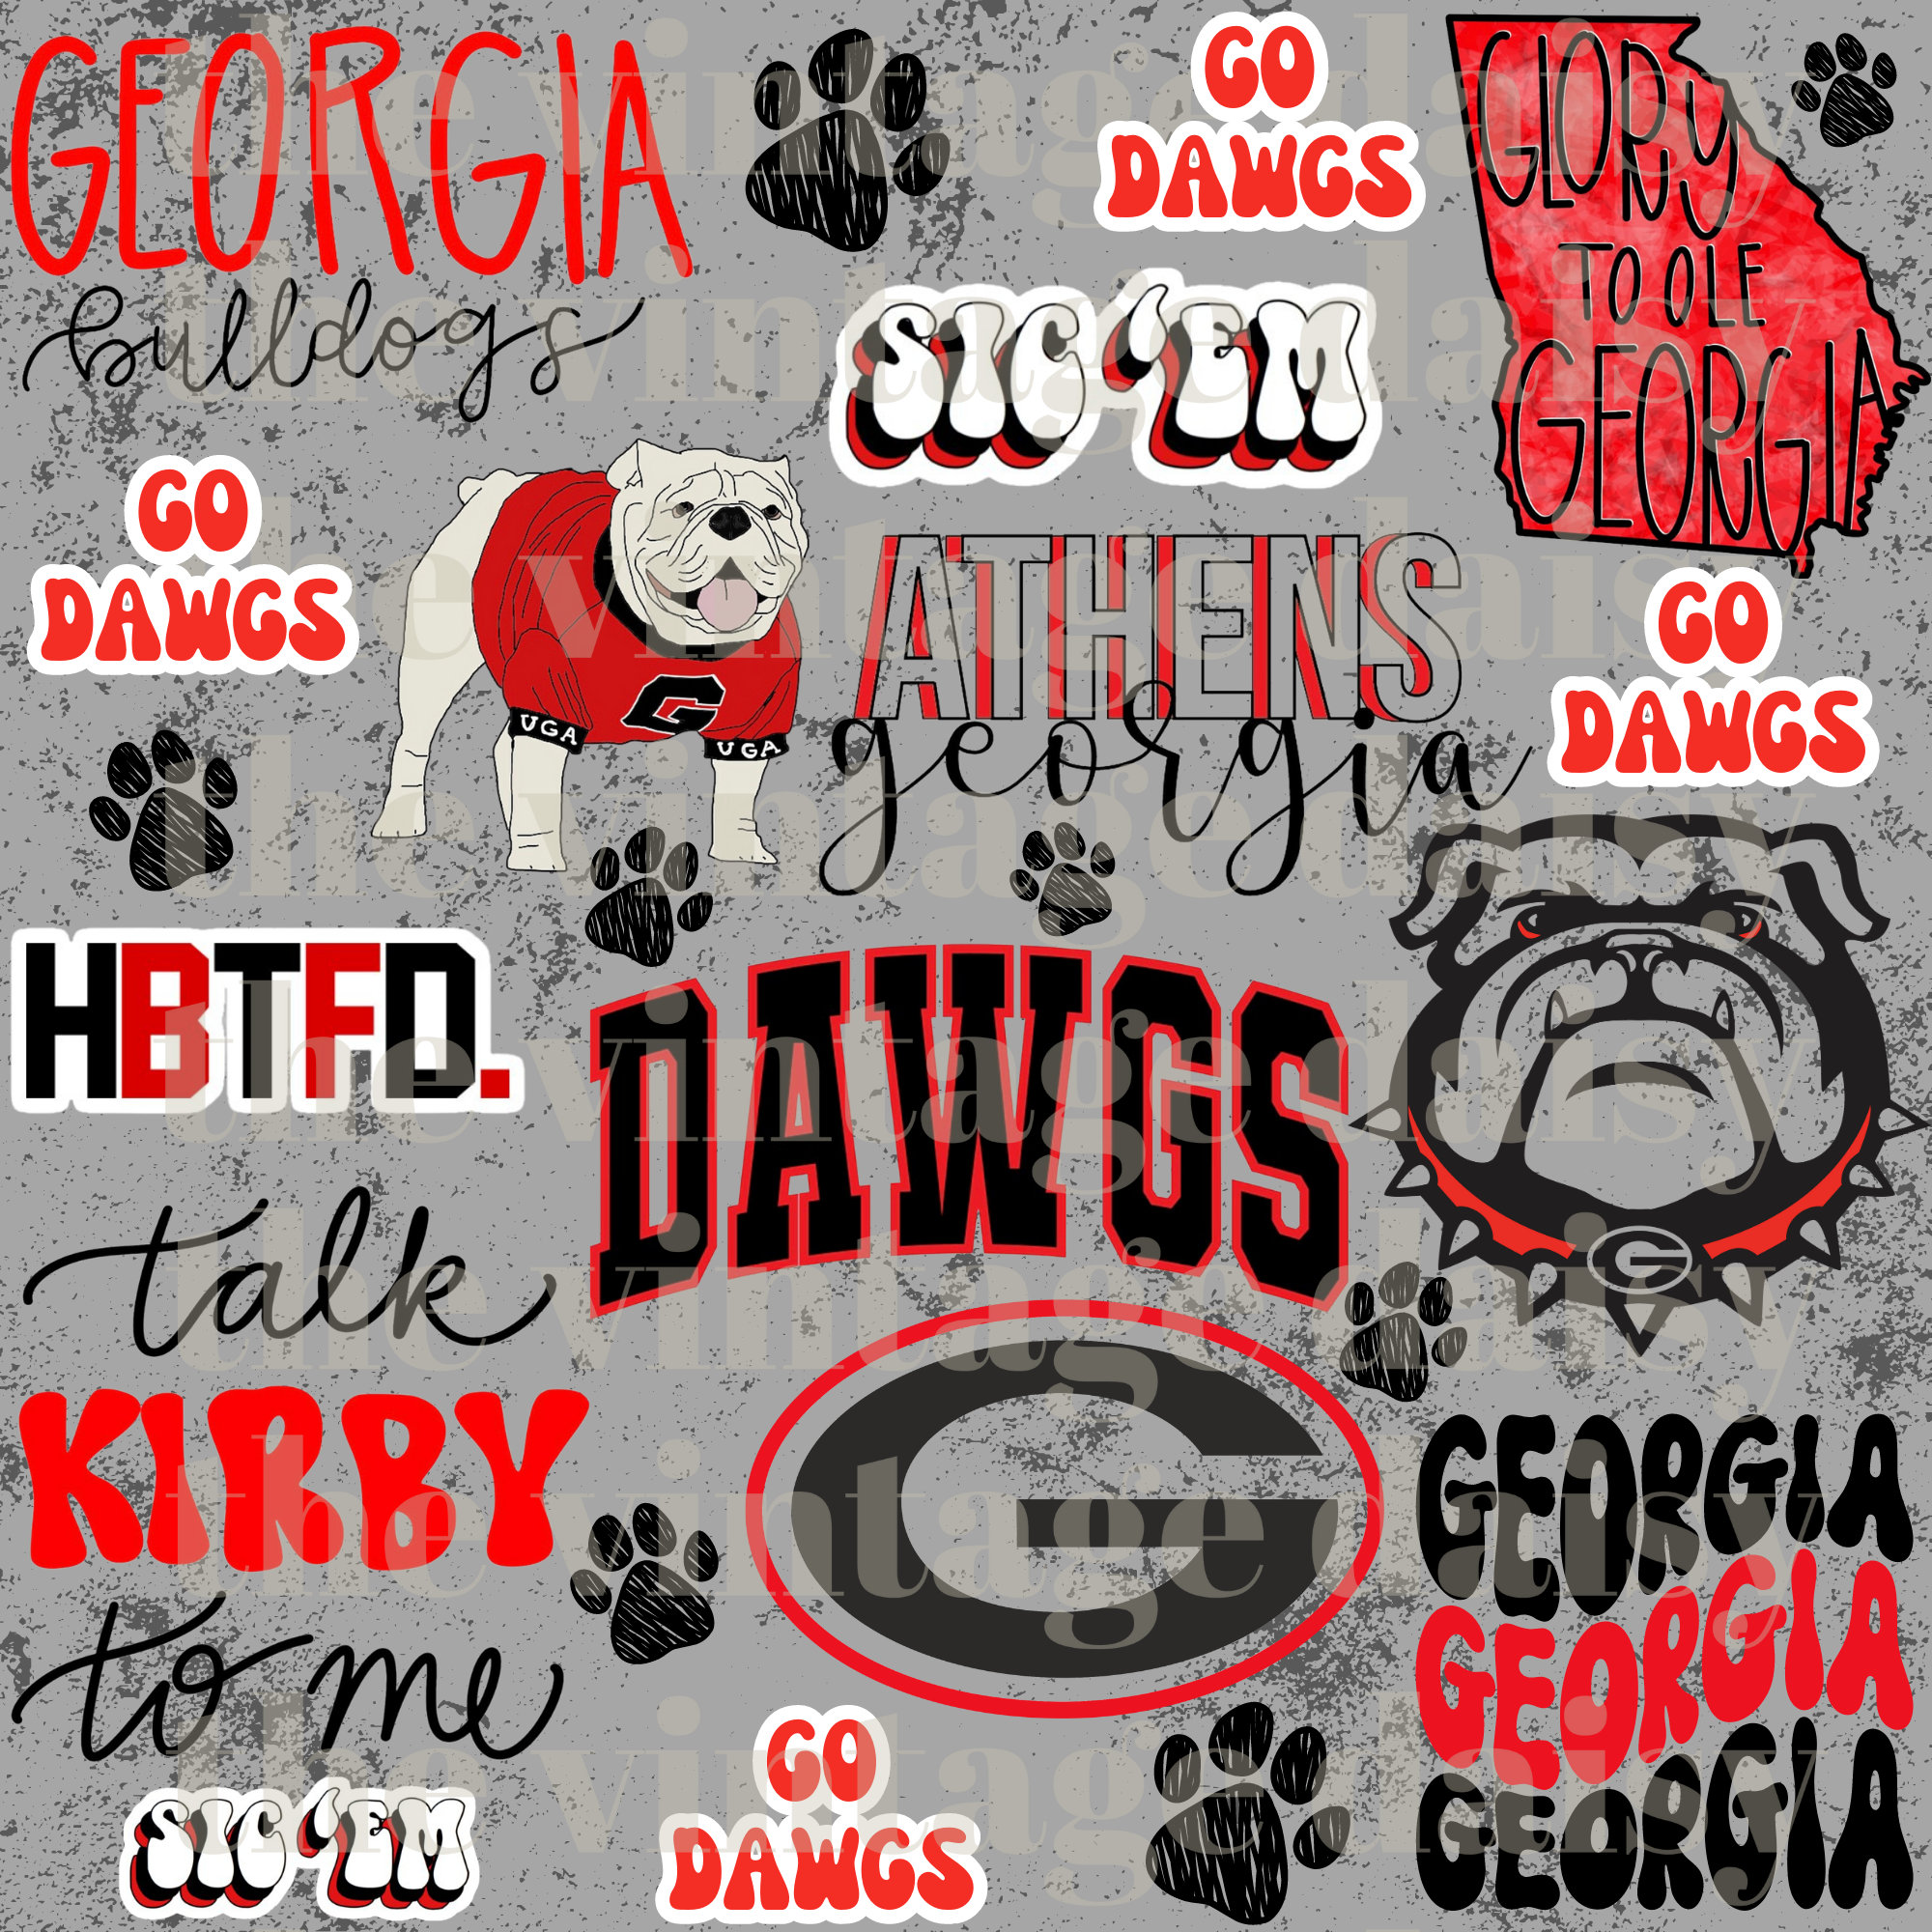 Georgia Bulldogs Braves 2021 Champions UGA Shirt - Ink In Action